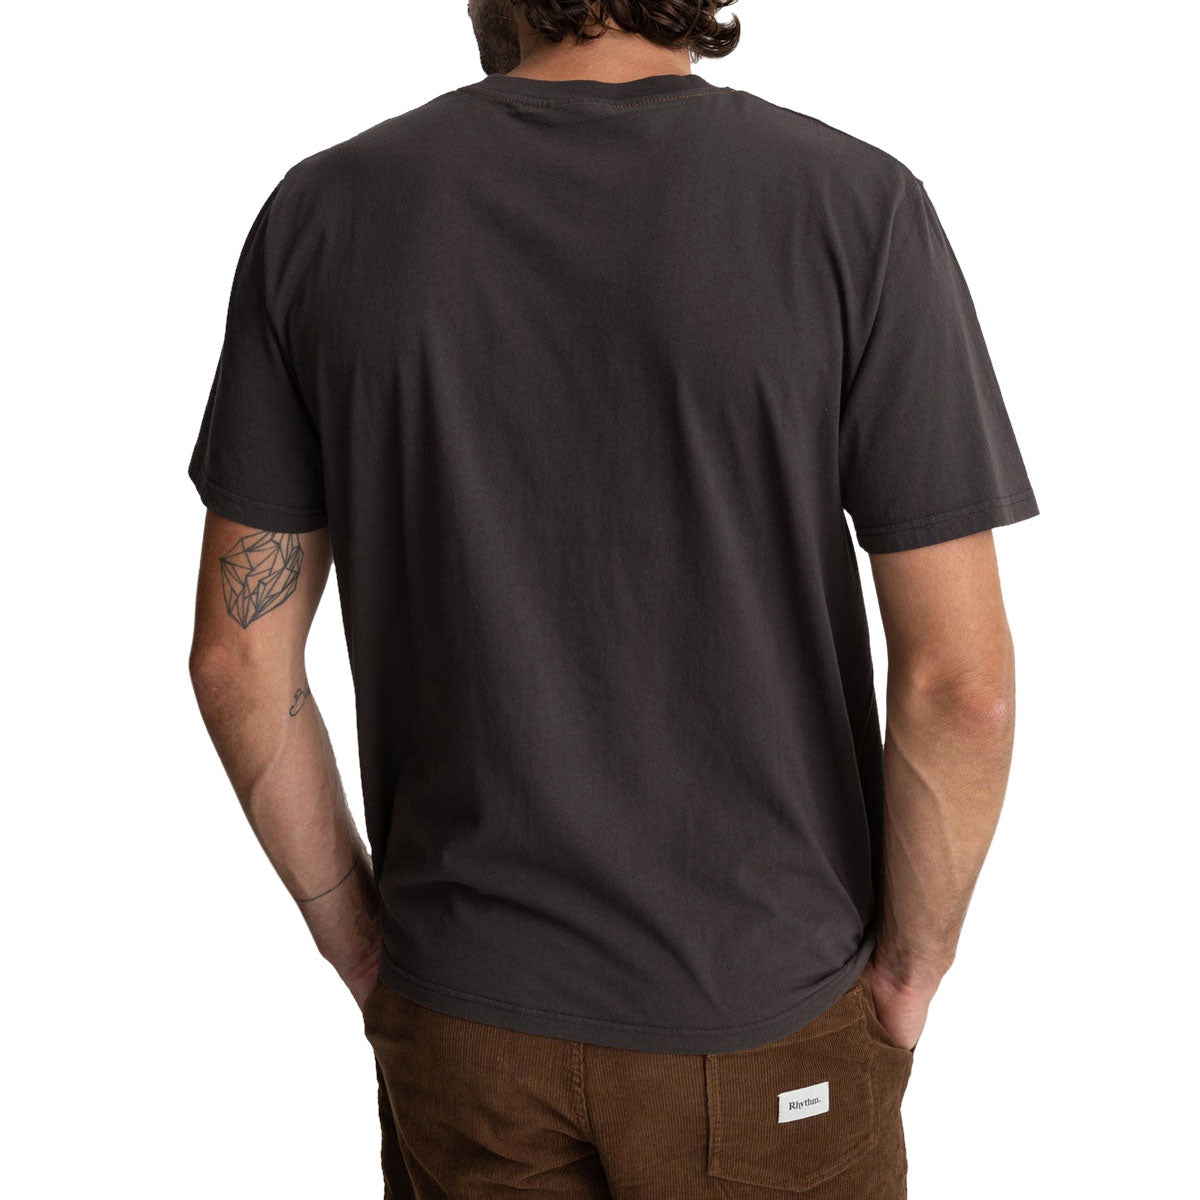 Rhythm Classic Brand T-Shirt - Vintage Black image 3